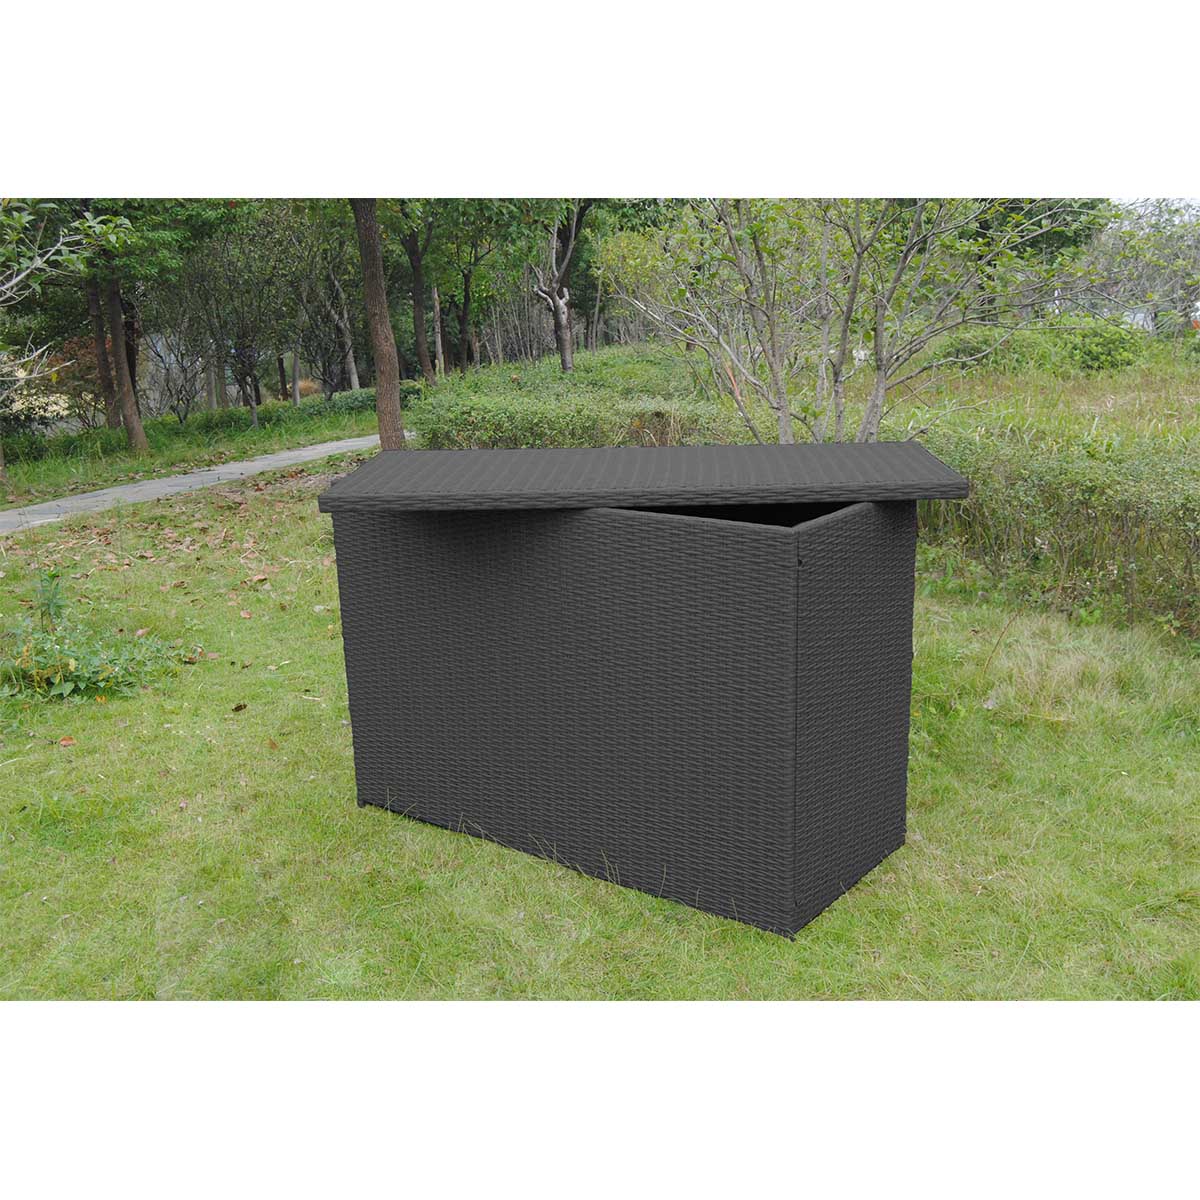 CHARCOAL Rattan Cushion Storage Box